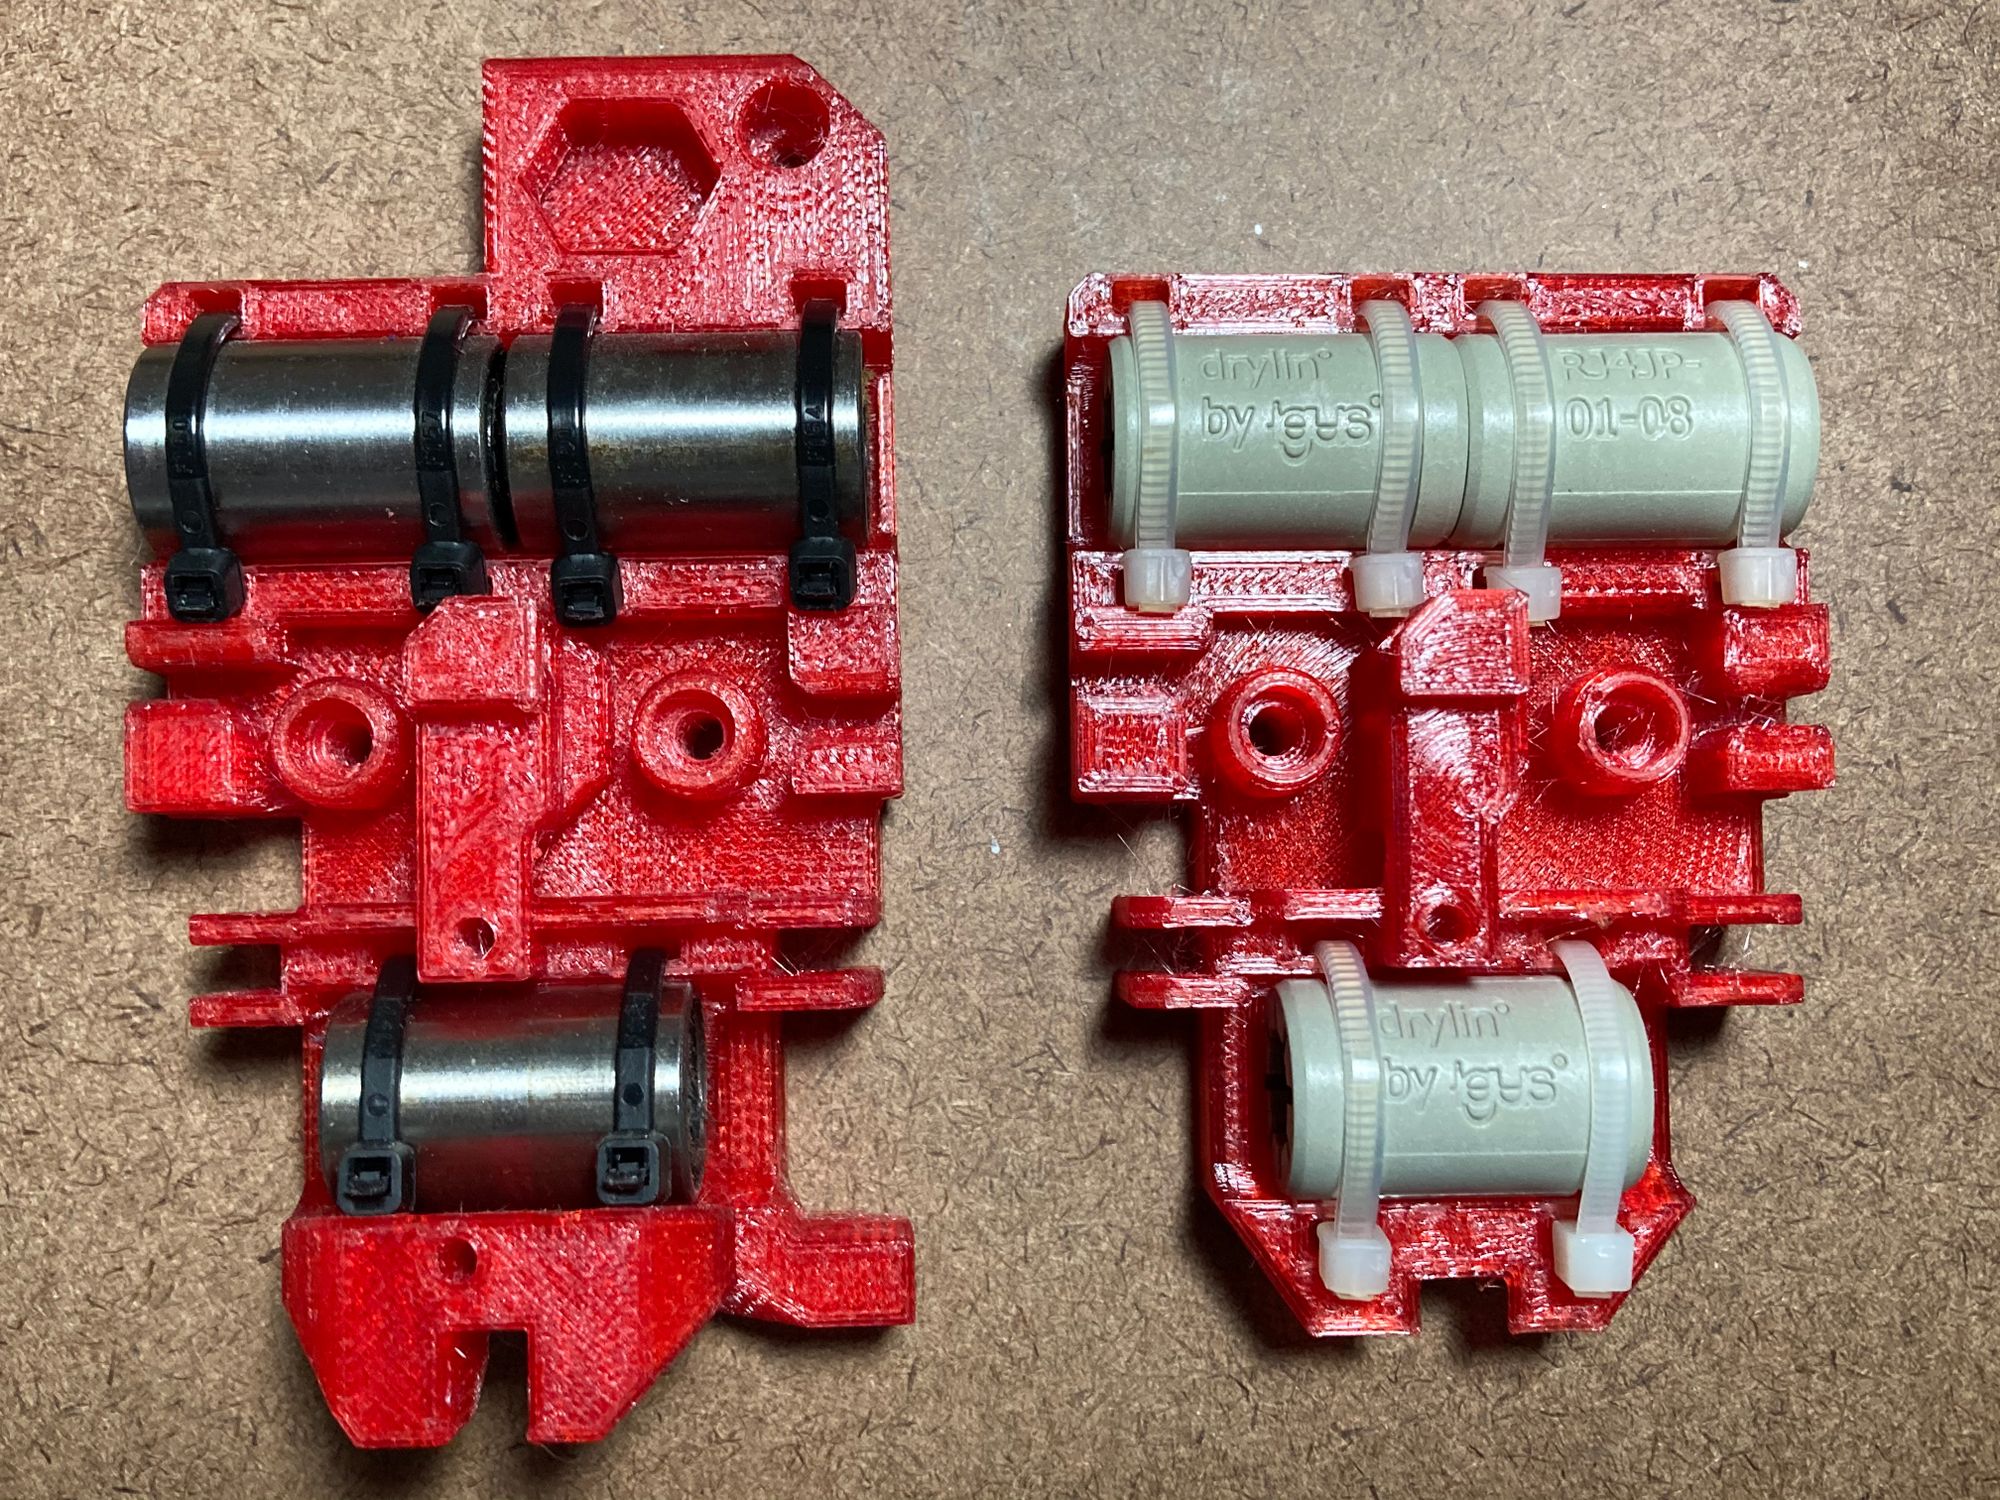 Makerfront Rebuild Part 2: Printed Parts?